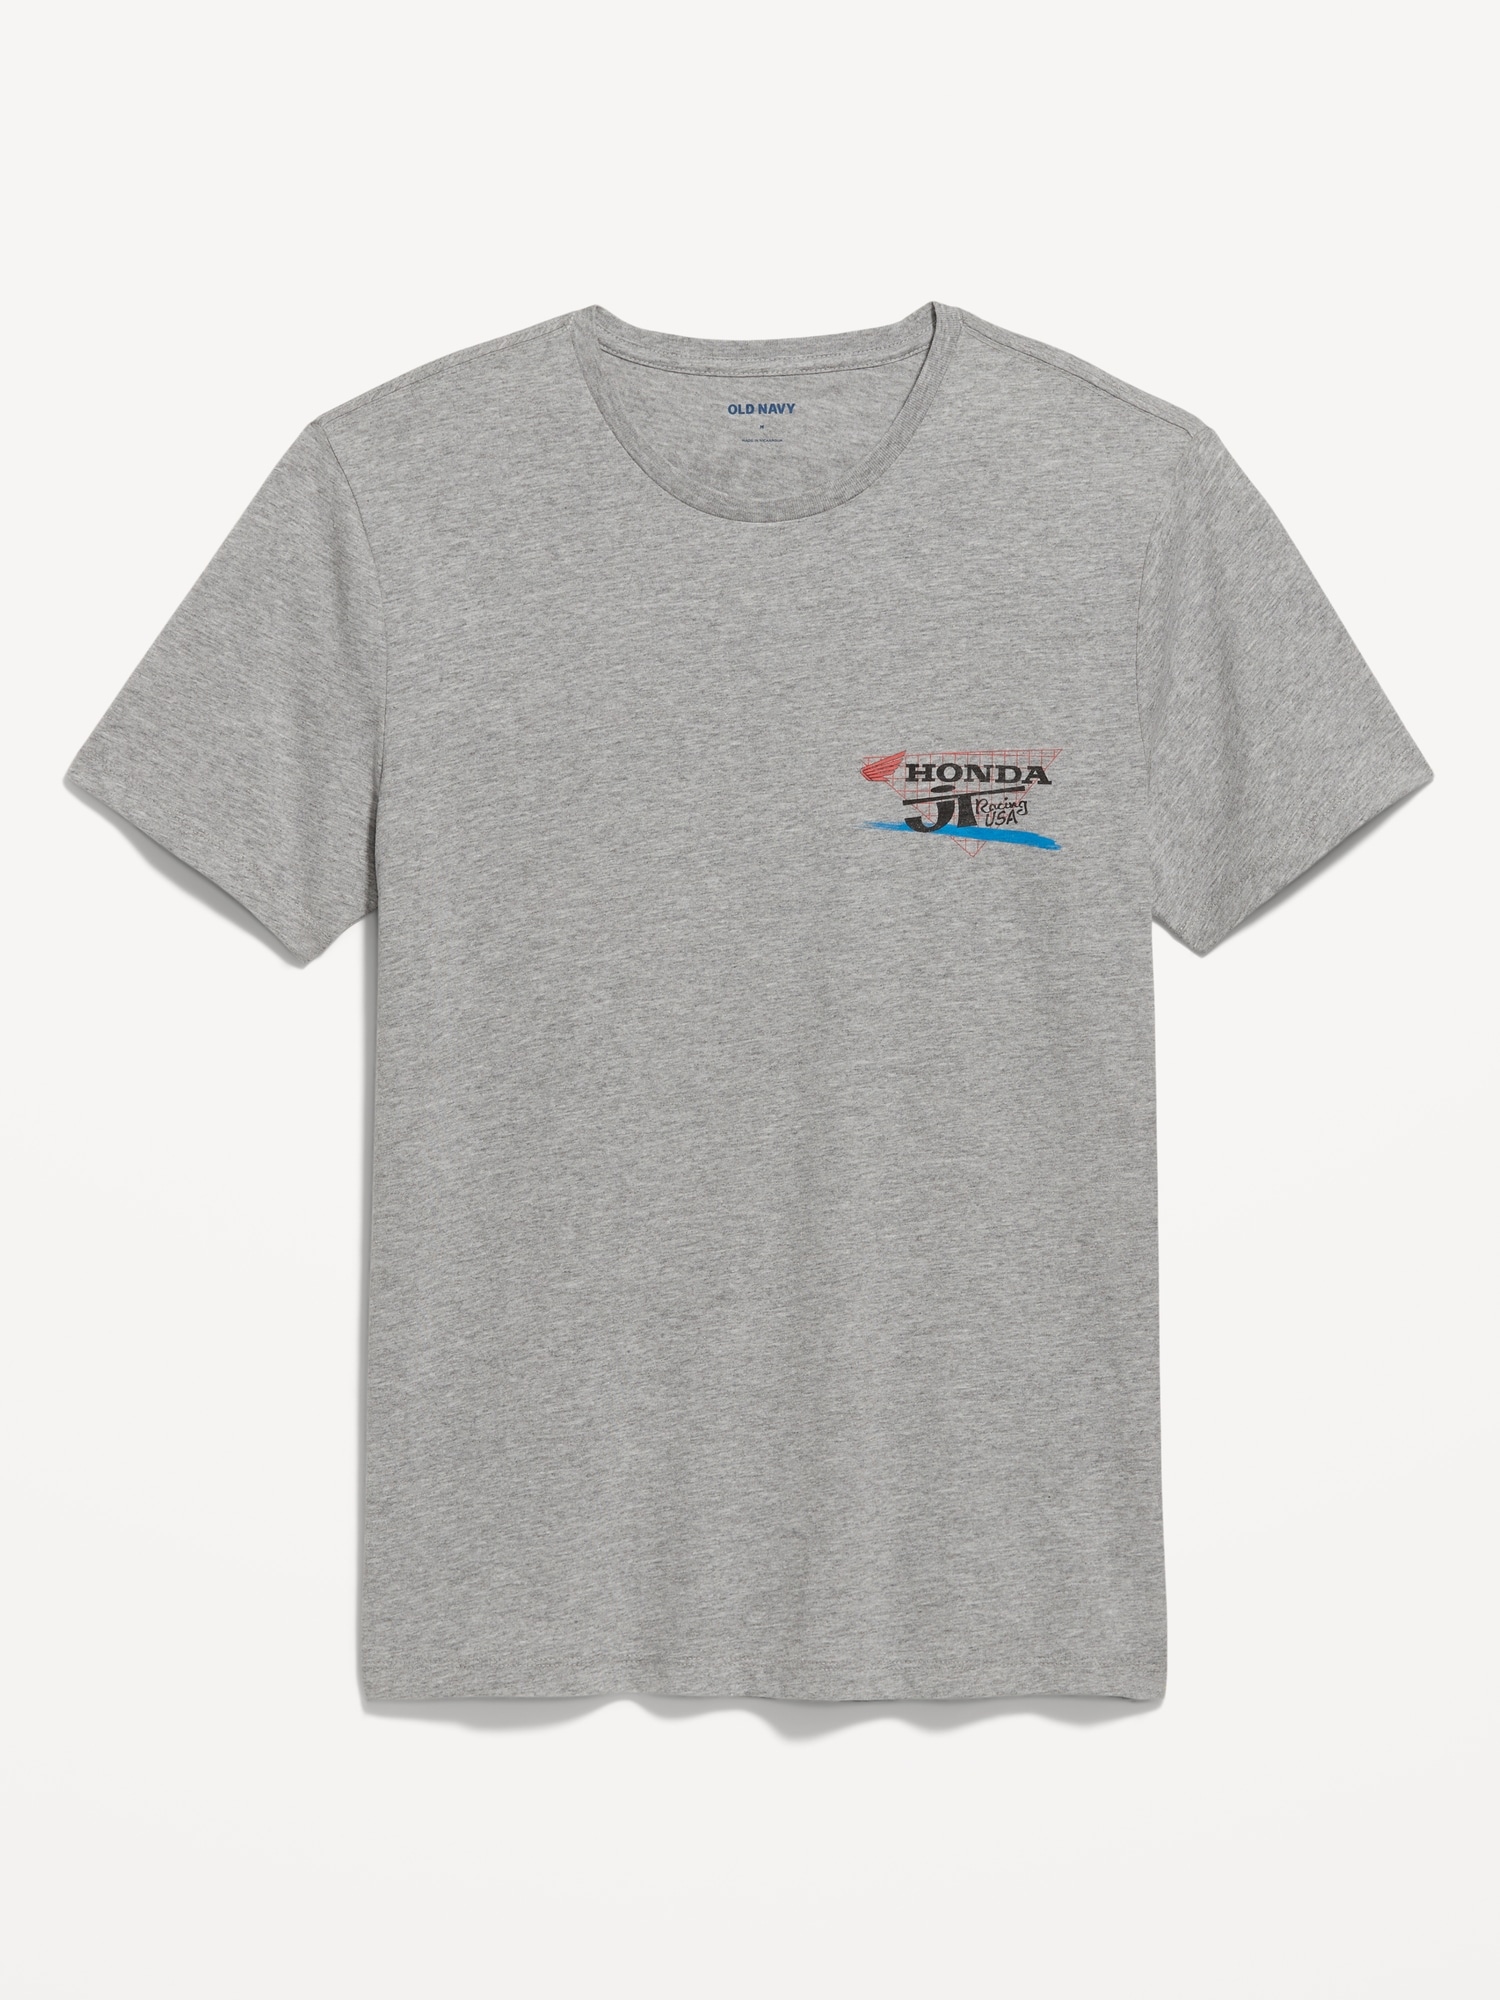 Hondaⓒ Gender-Neutral T-Shirt for Adults